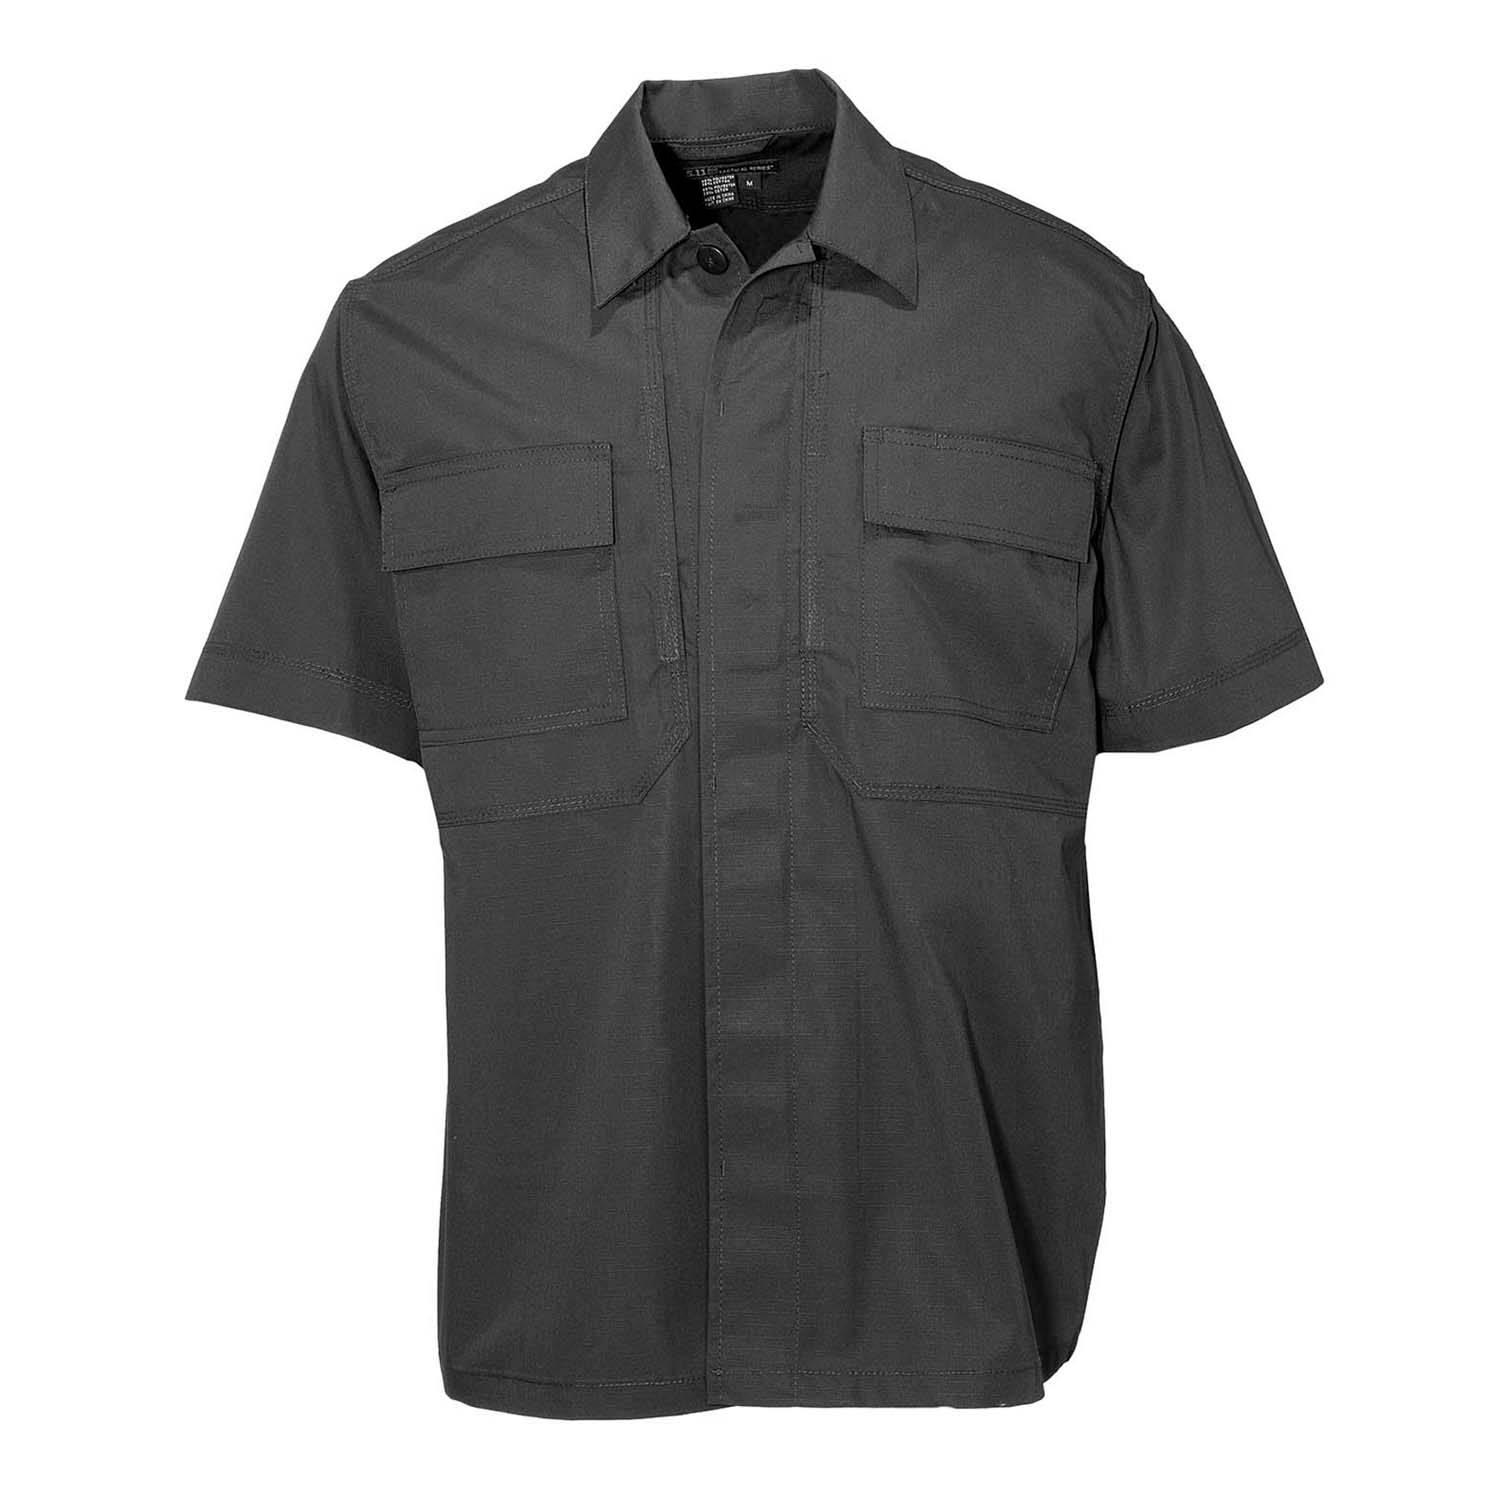 5.11 Mens Tactical Taclite Professional Long Sleeve Tall EDC Shirt